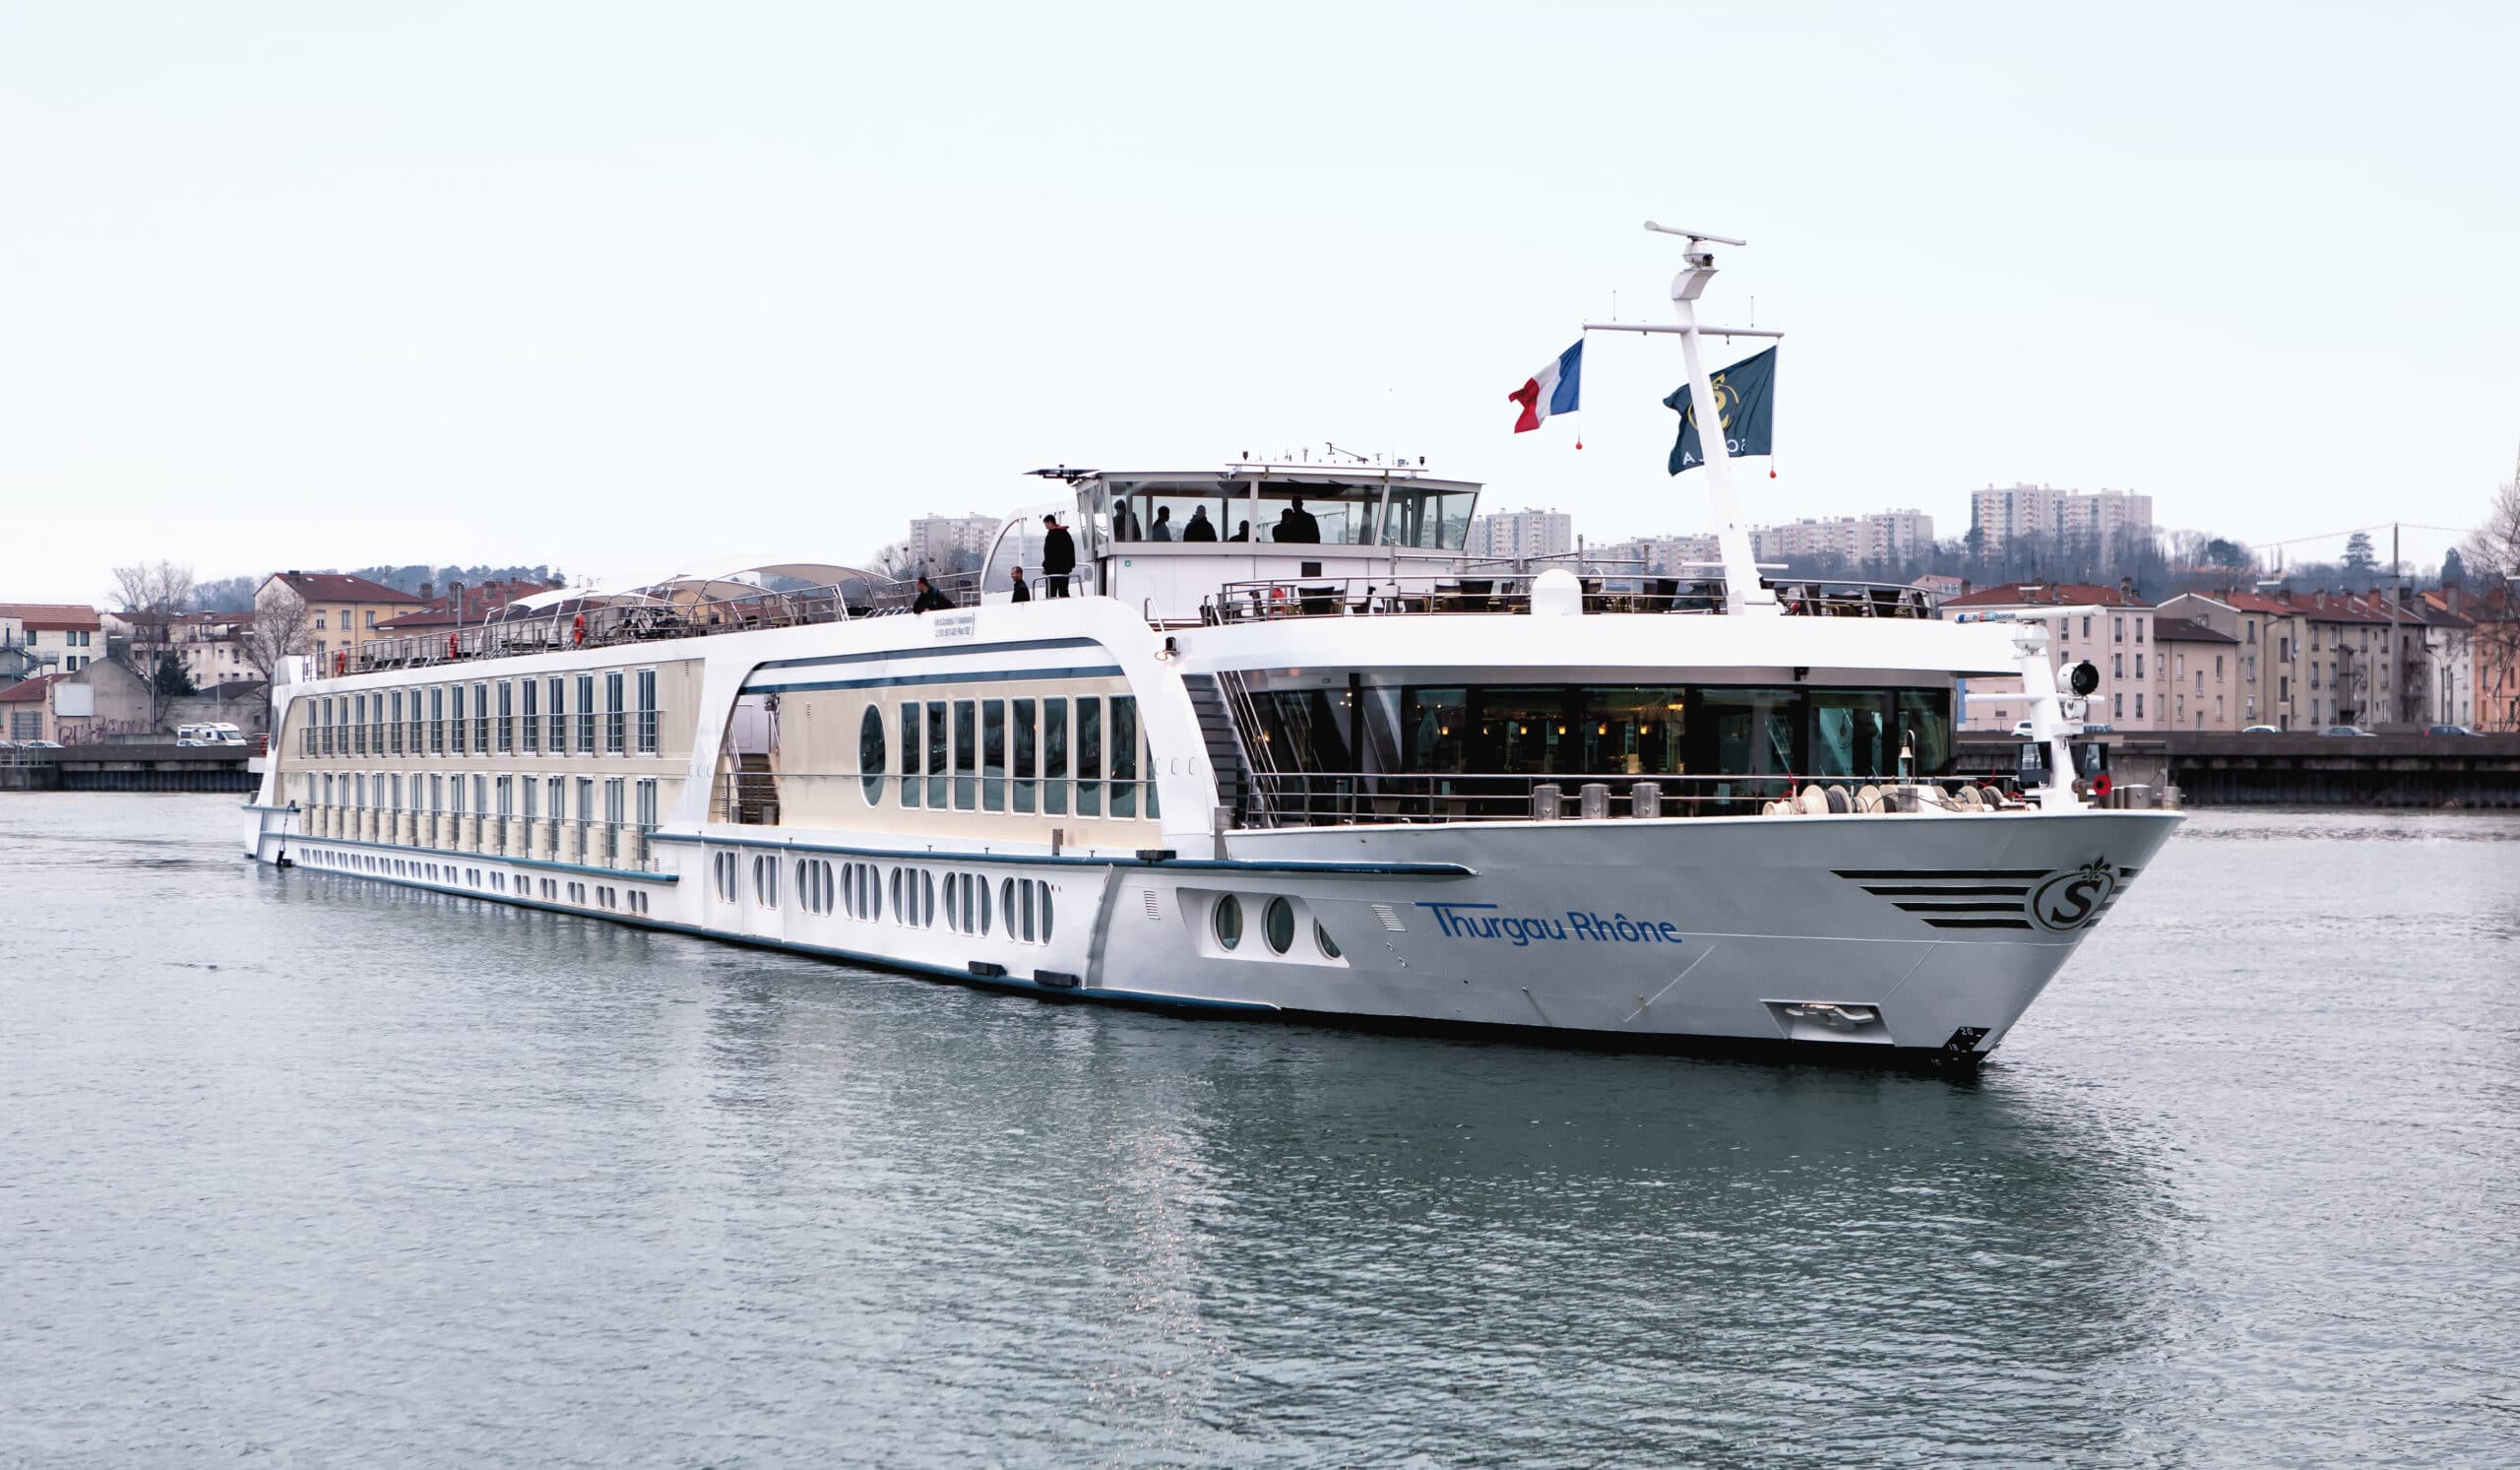 Nicko-Cruises-MS-Thurgau-Rhone-Rivierschip-Cruise-Schip-aangepast